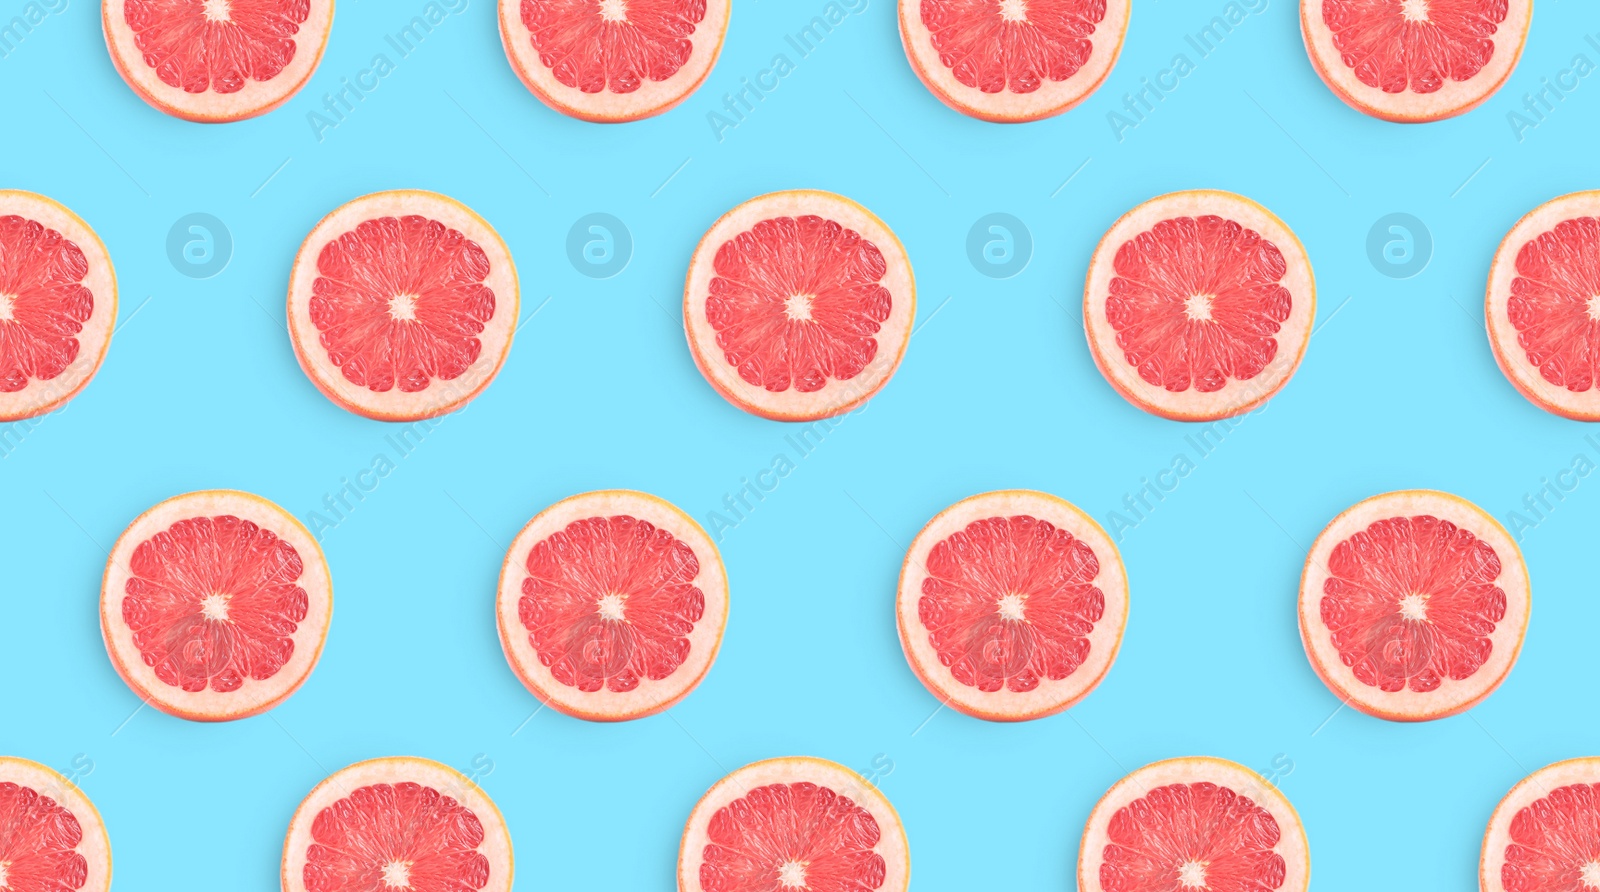 Image of Slices of grapefruits on light blue background, flat lay. Banner design